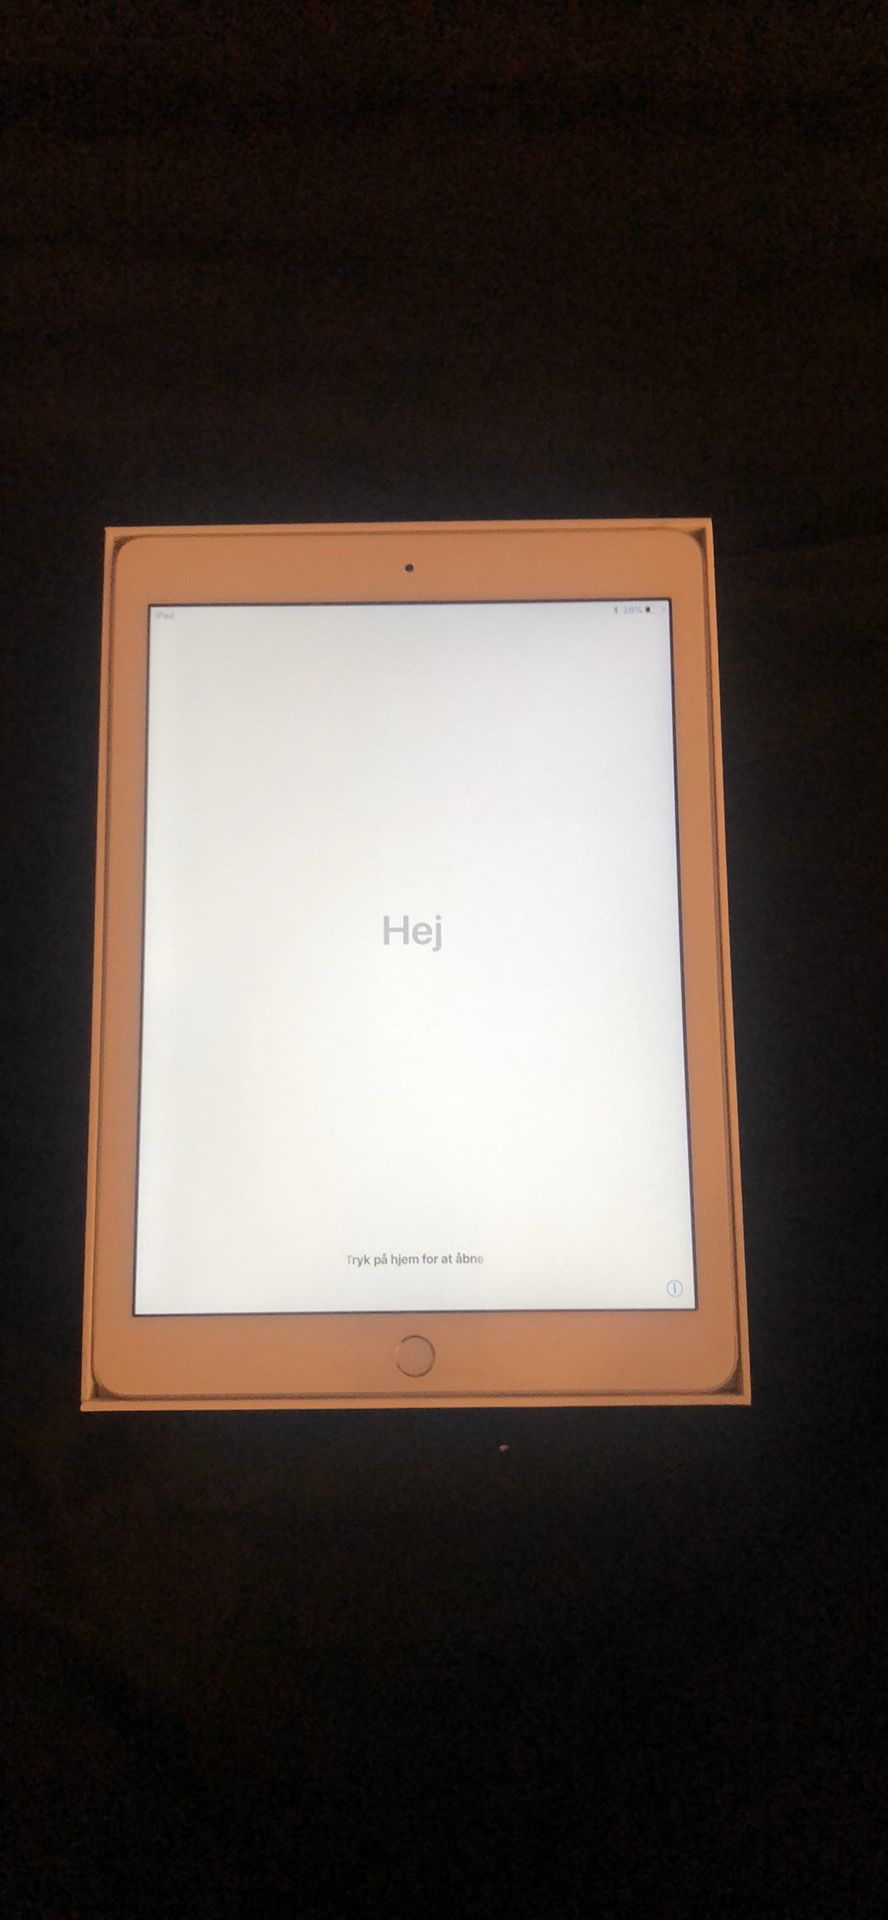 Brand new iPad. Apple - iPad 6th gen with Wi-Fi - 32GB - white